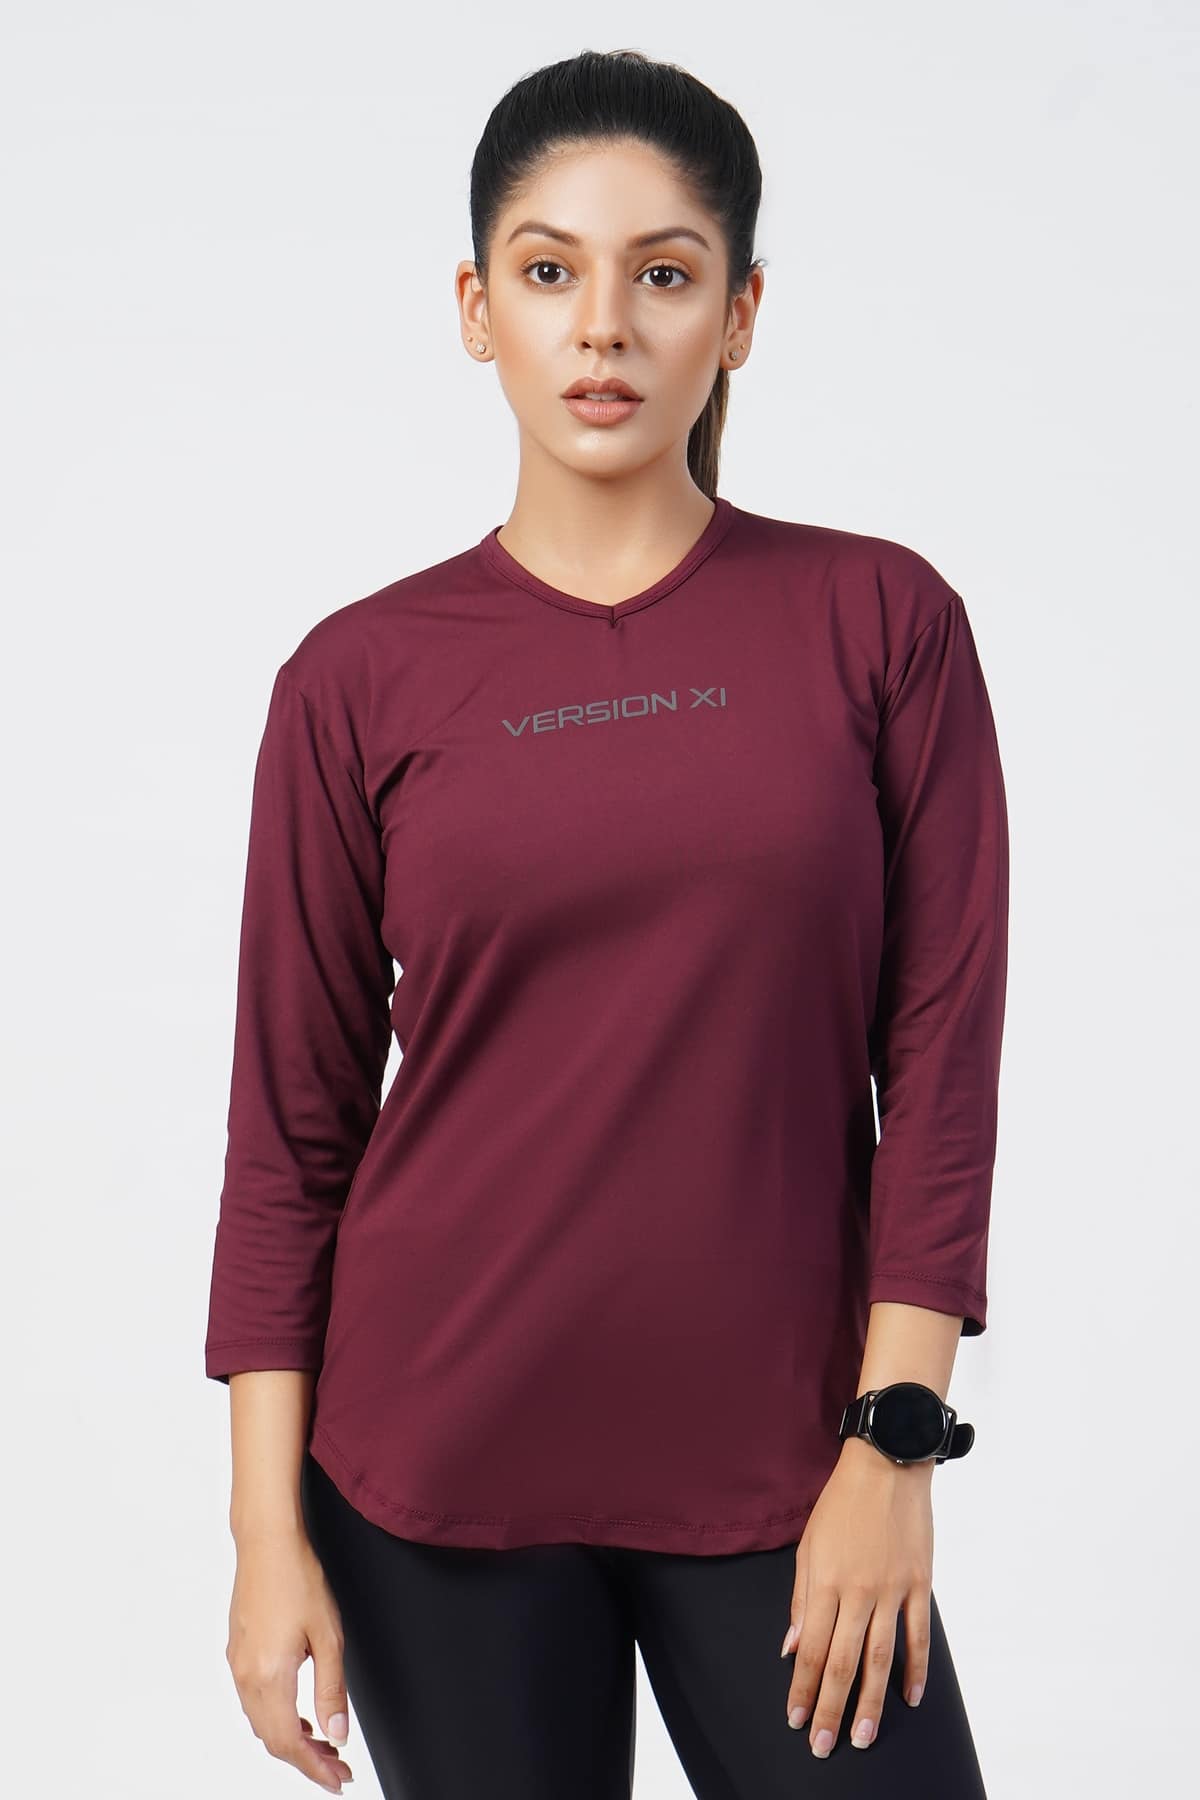 Flex Three Quarter Sleeves Shirt for Women - Version XI